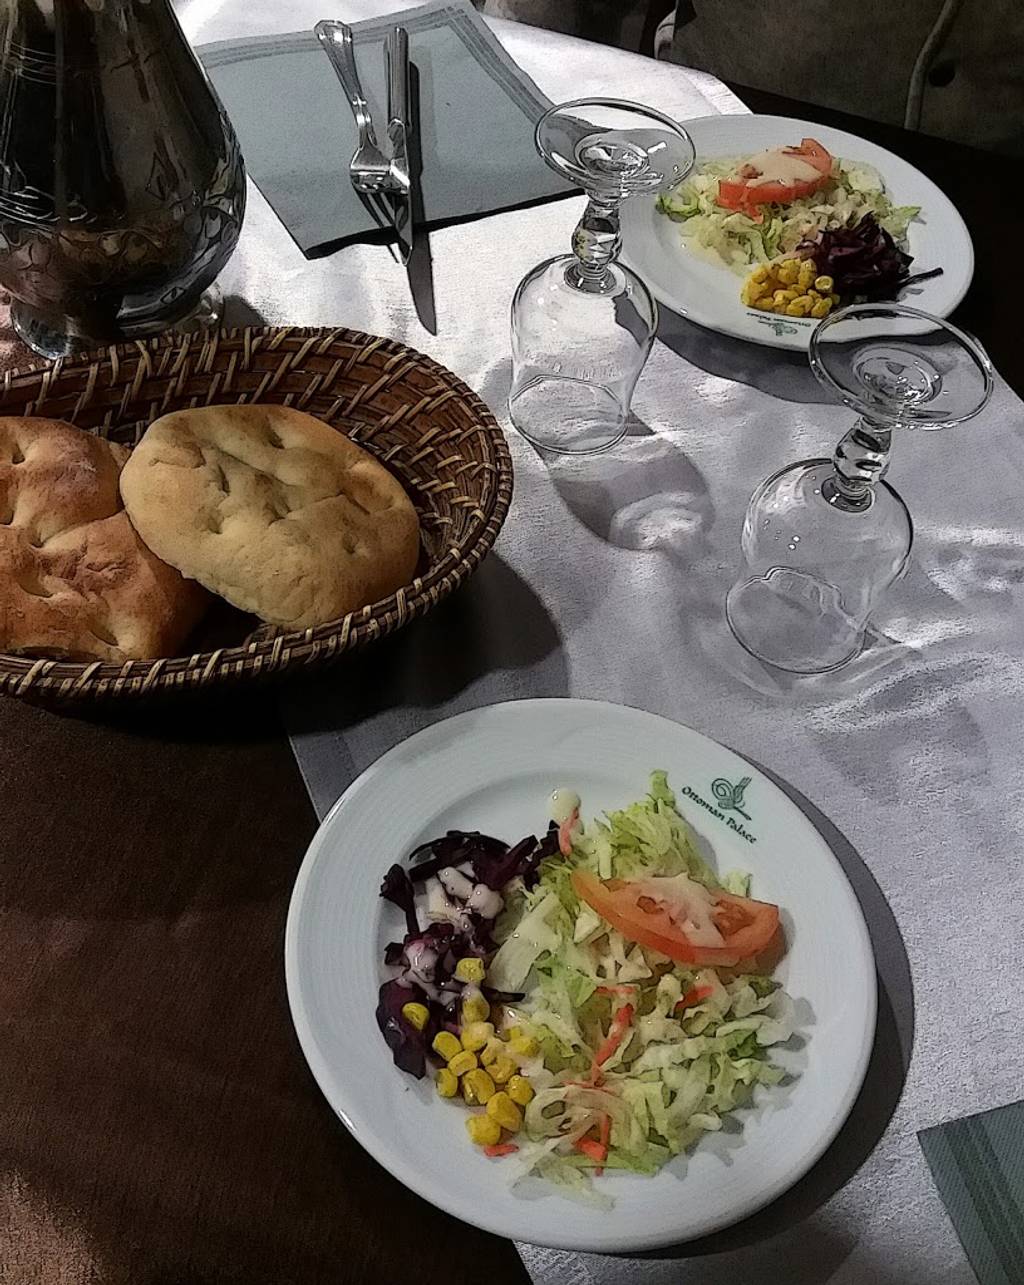 Ottoman Palace Grillades Le Petit-Quevilly - Dish Food Cuisine Meal Brunch